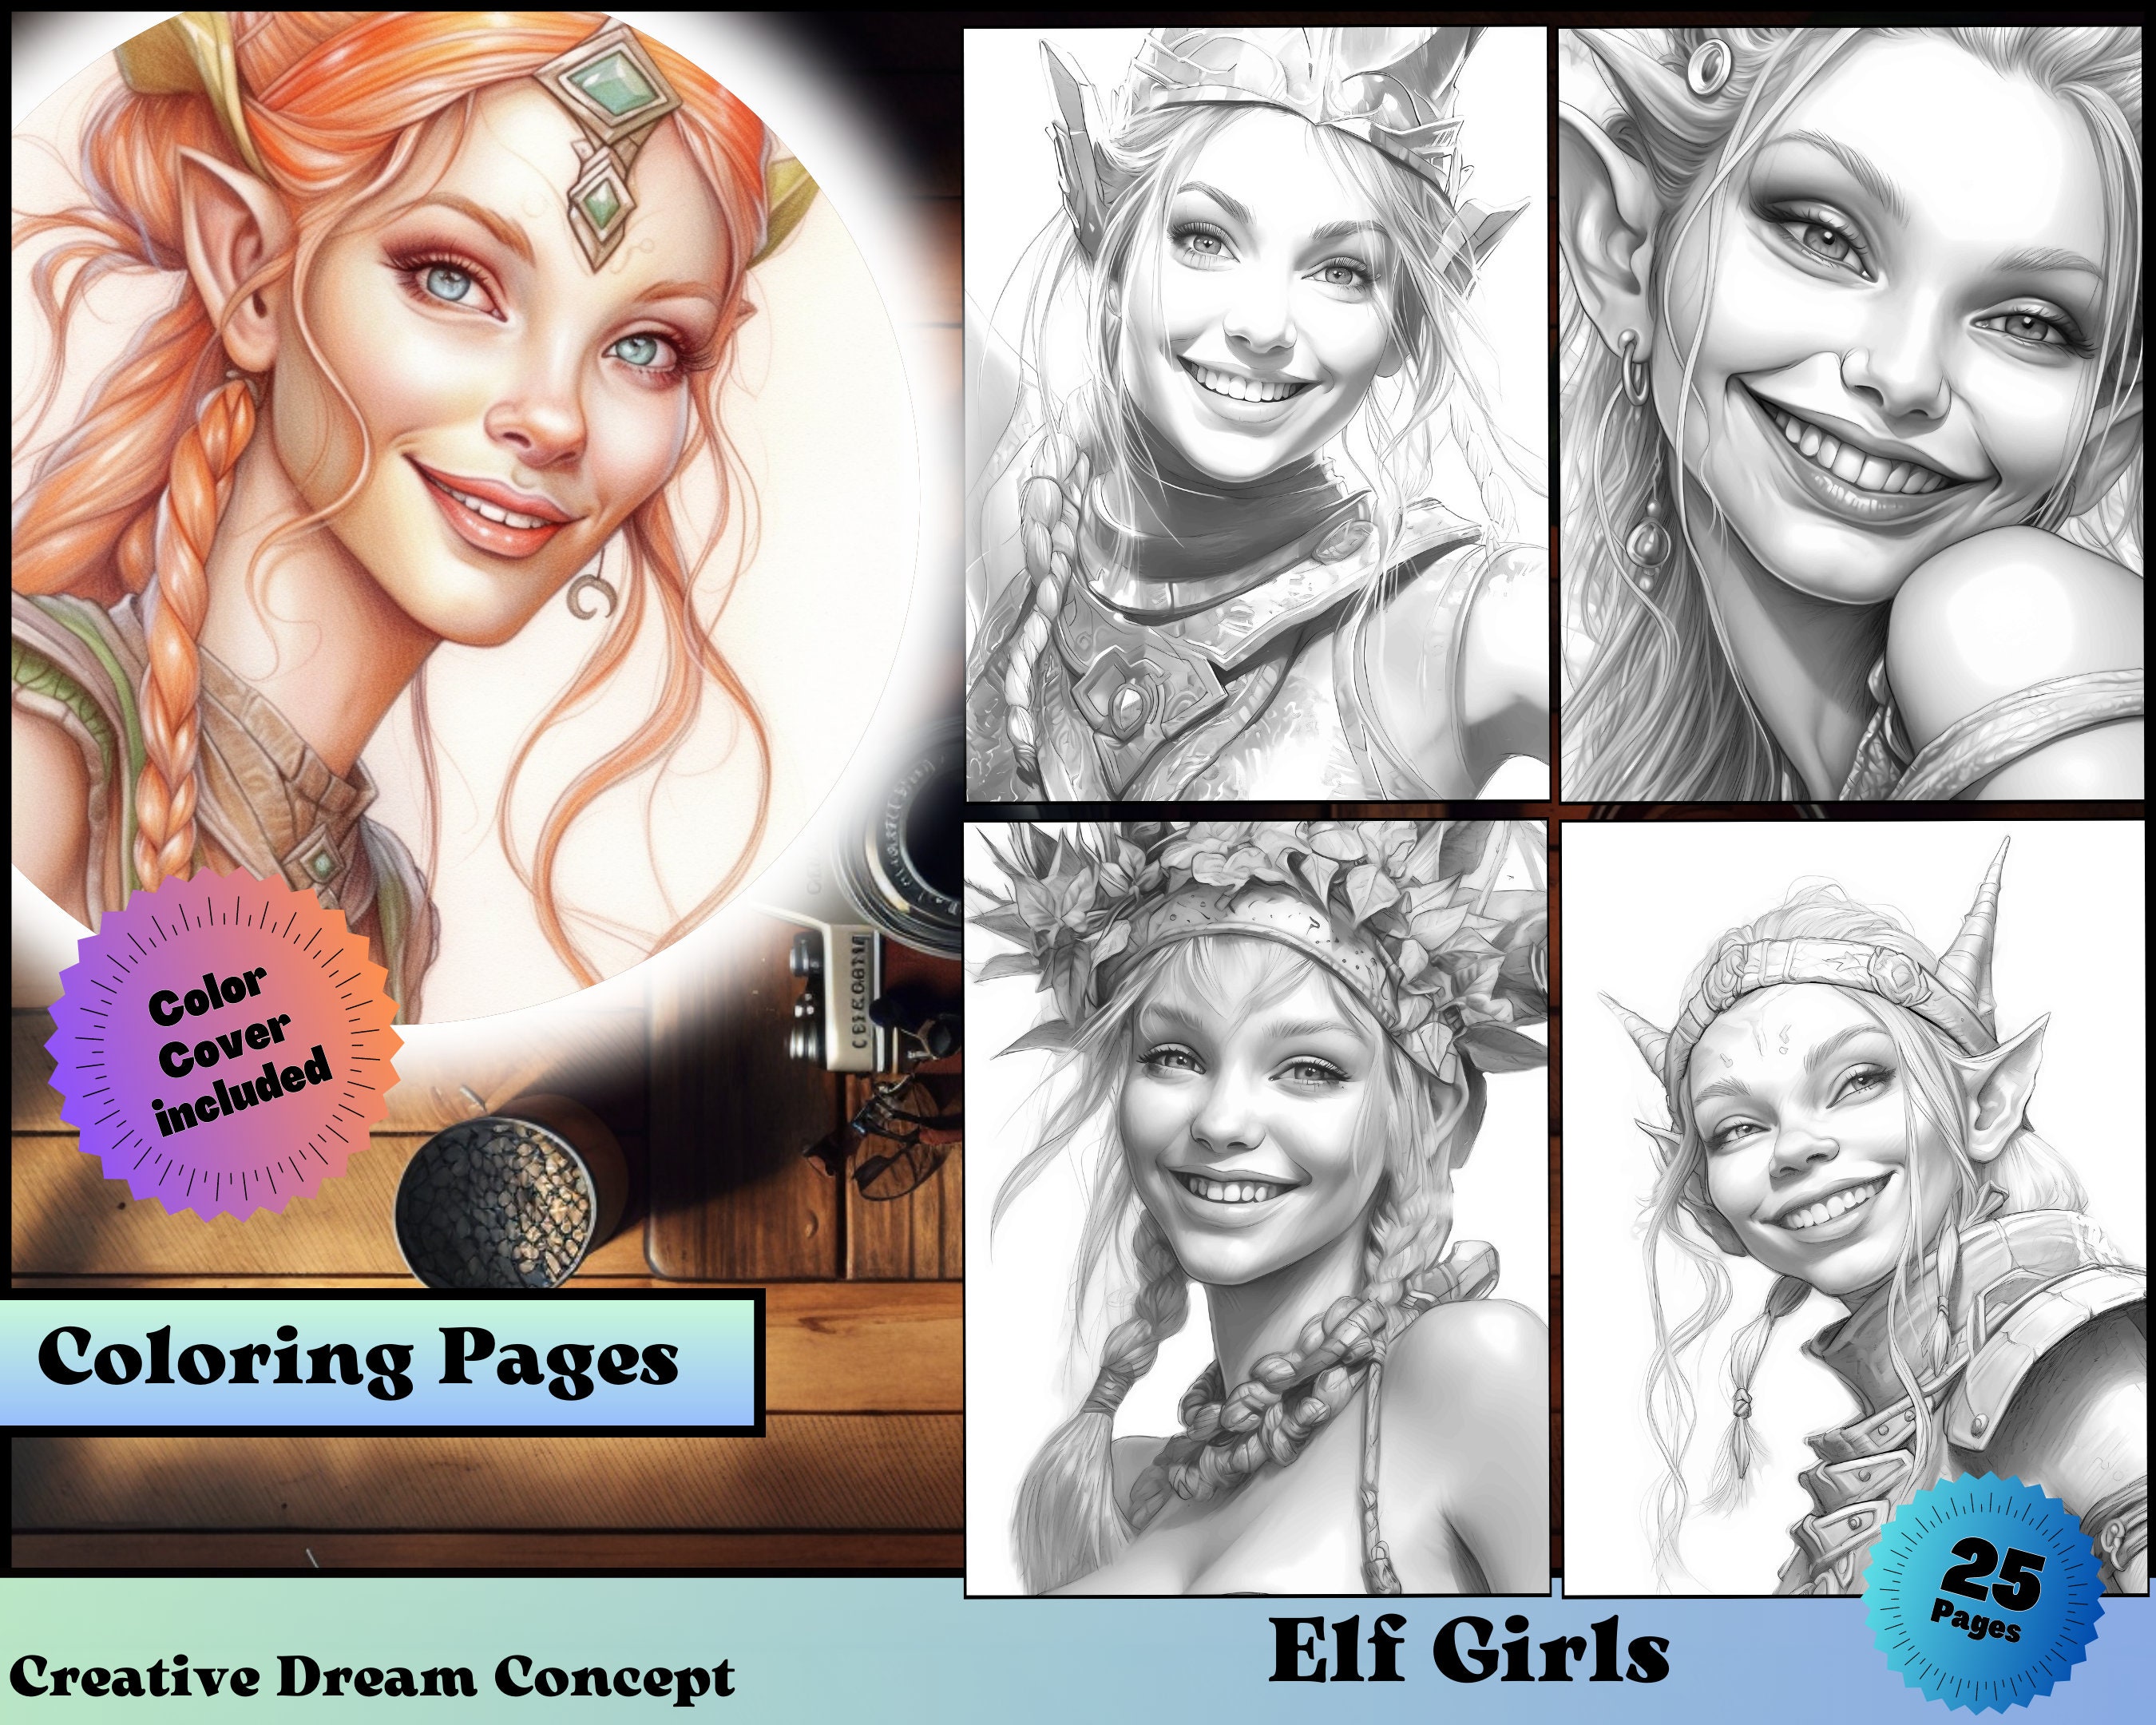 Colouring Heaven Collection Elves Behavin' Badly print Magazine Exclusive  Festive Colouring Pages Elfie & Evie 